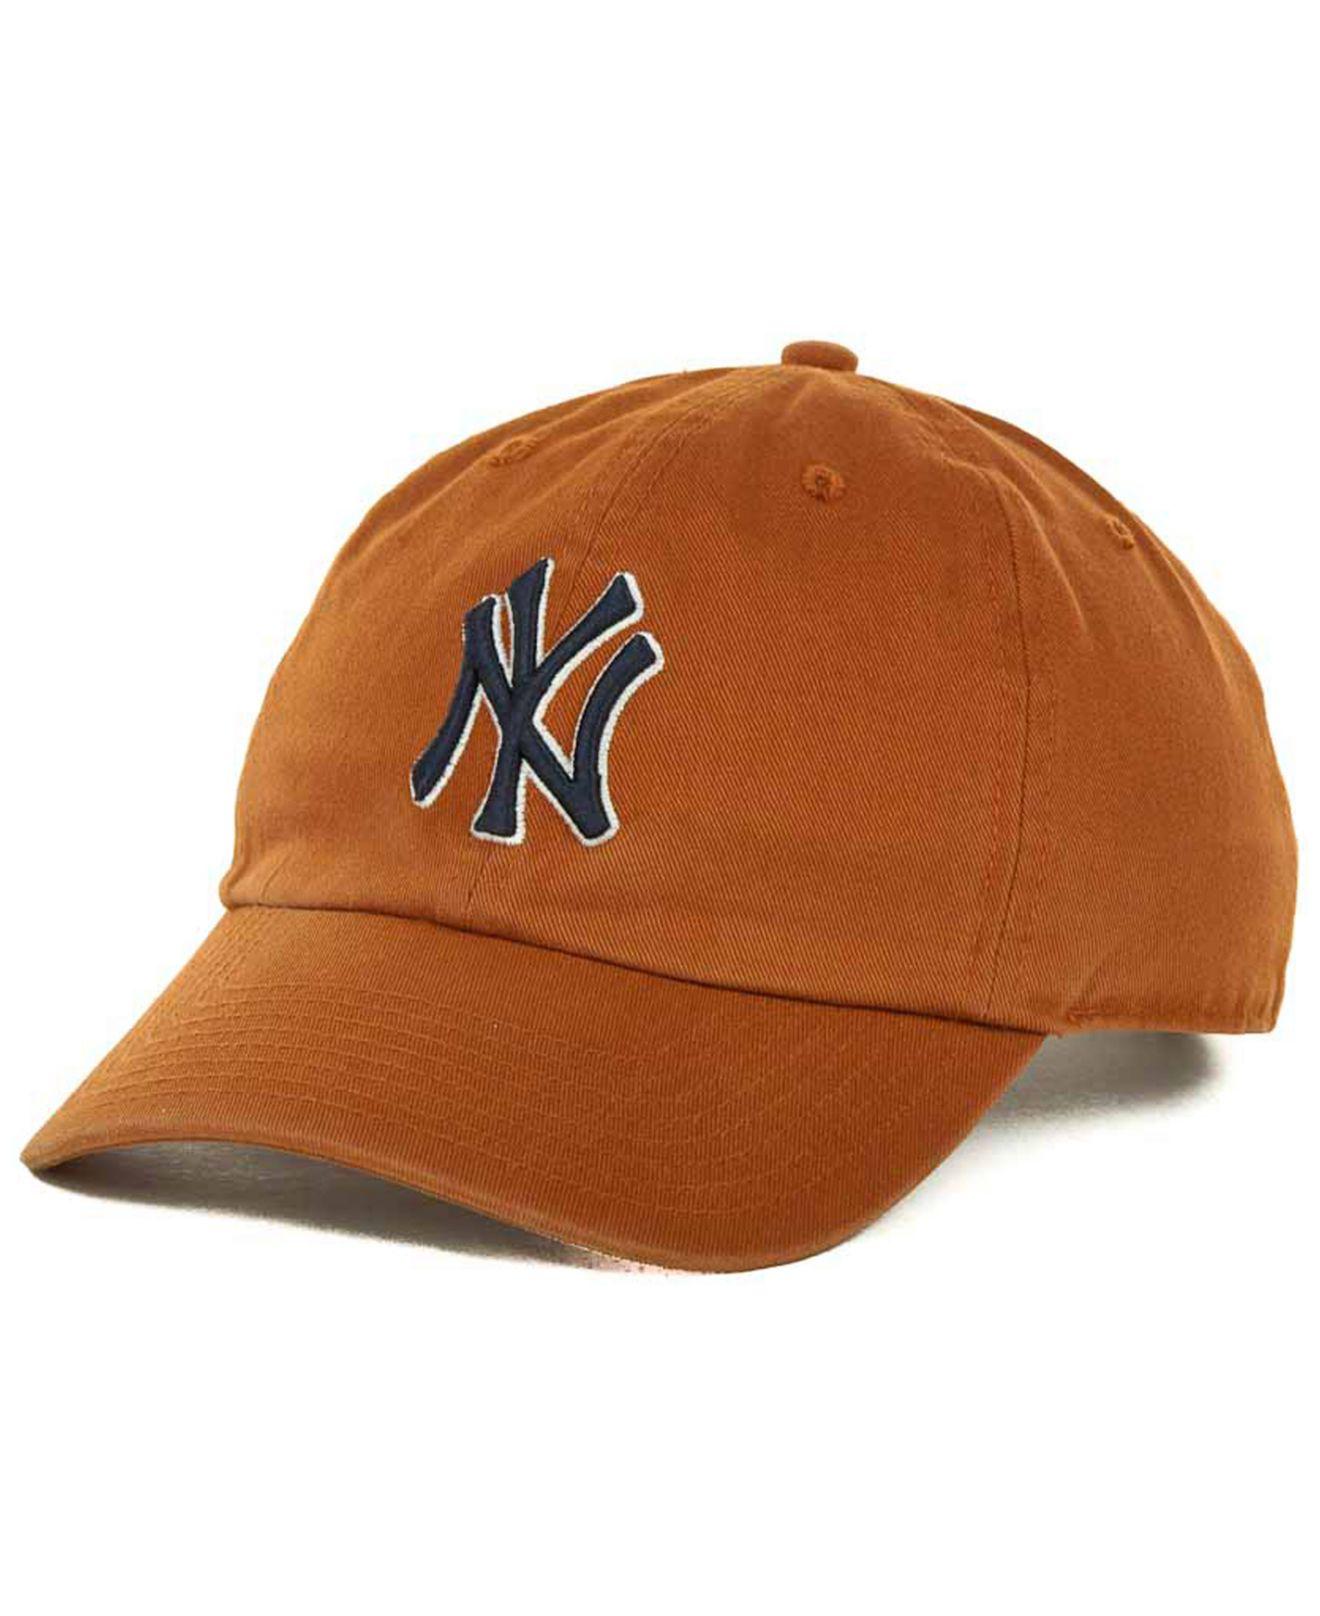  MLB New York Yankees Women's '47 Brand Clean Up Cap